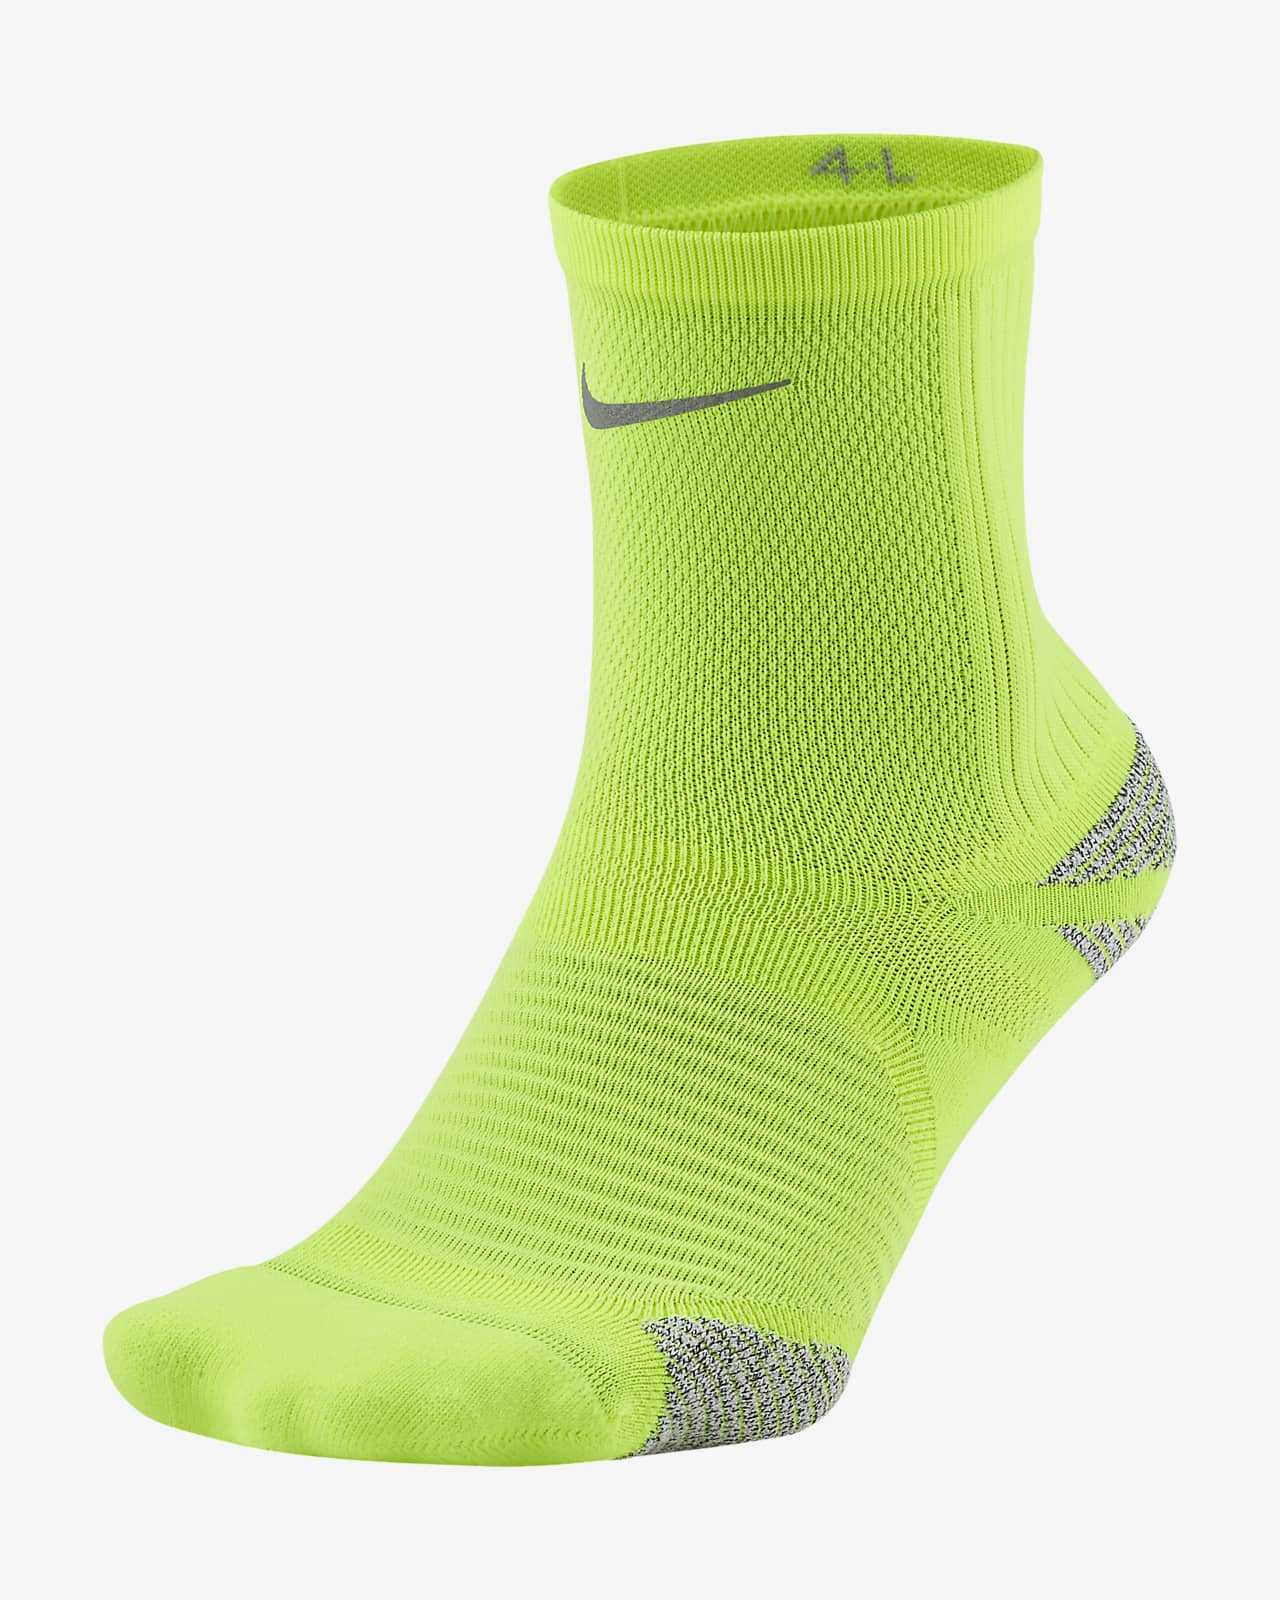 Nike Racing Ankle Socks. Nike LU